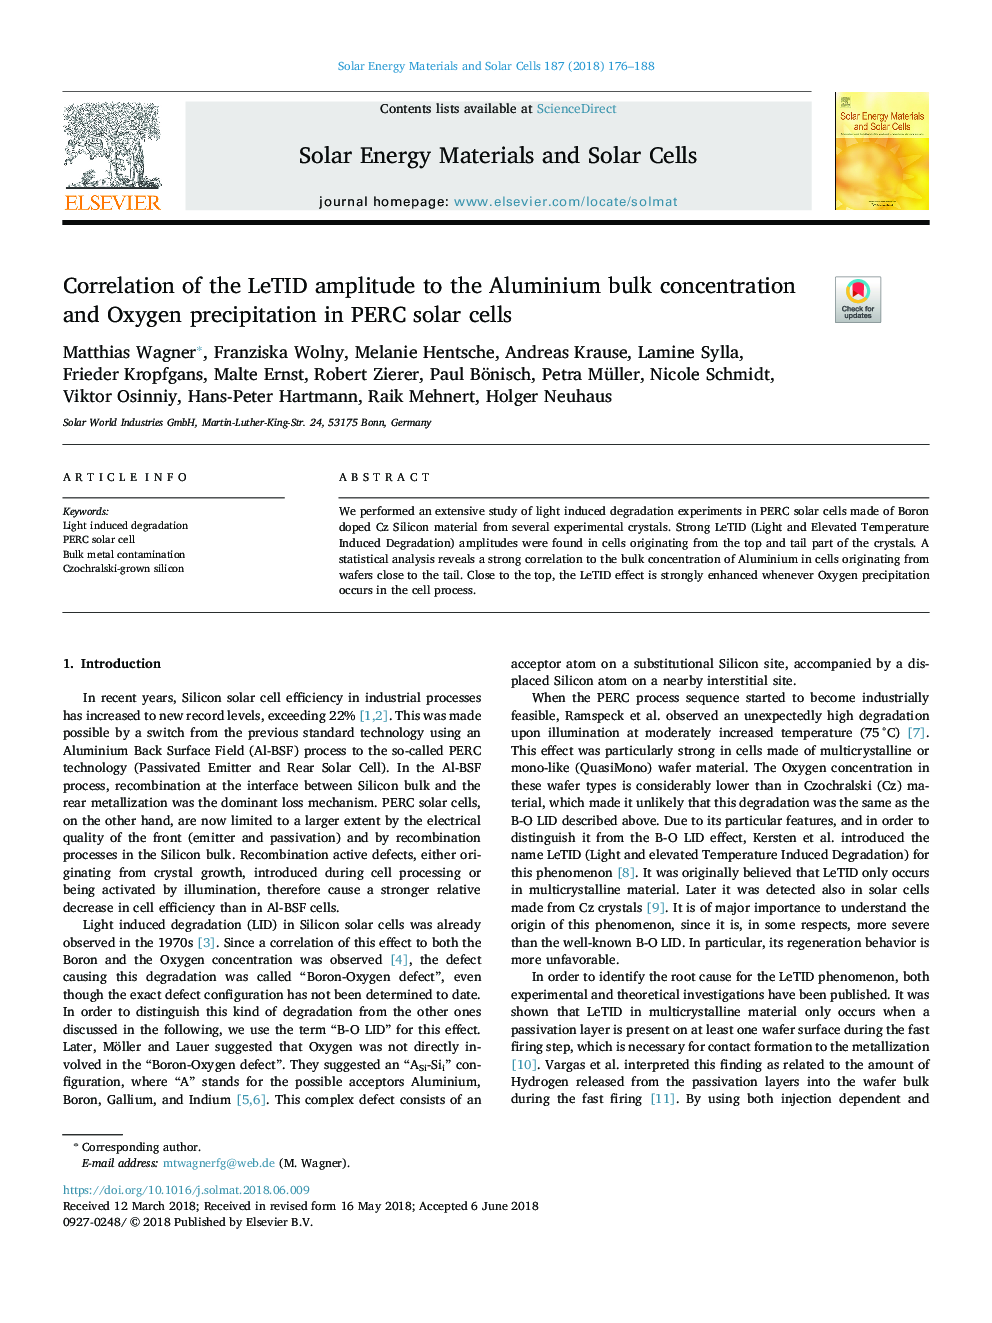 Correlation of the LeTID amplitude to the Aluminium bulk concentration and Oxygen precipitation in PERC solar cells